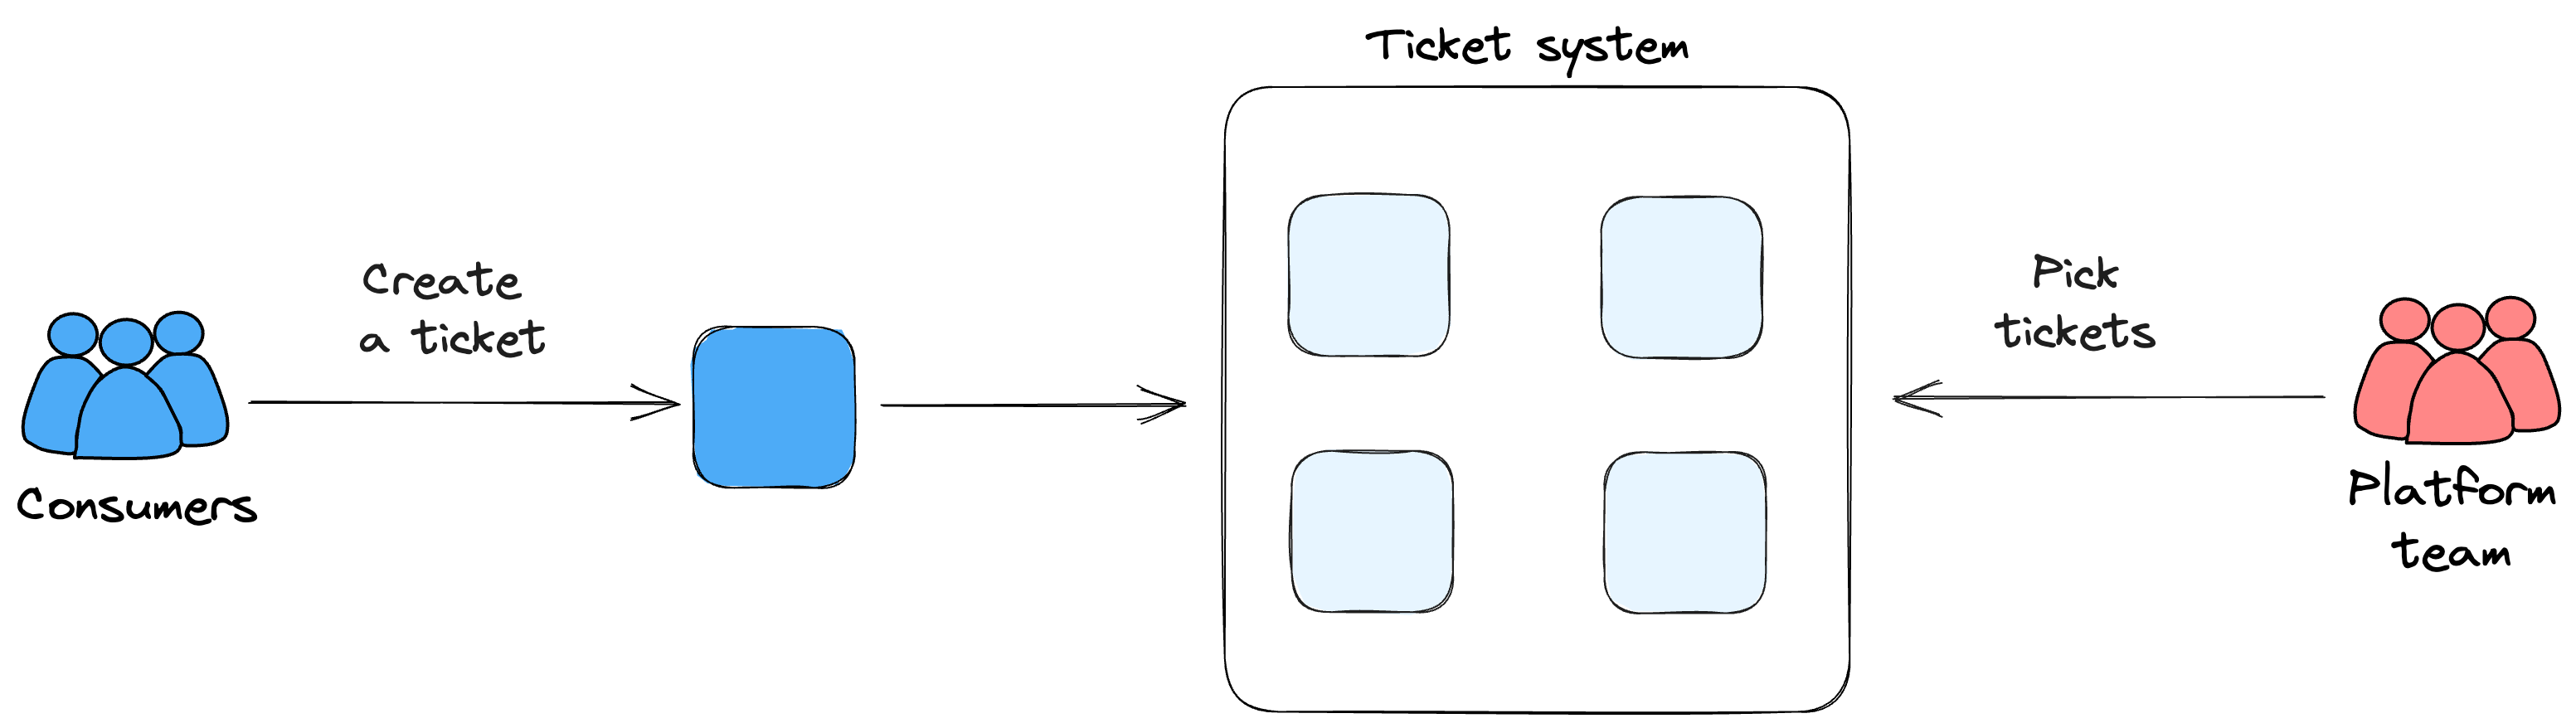 Ticket system 2